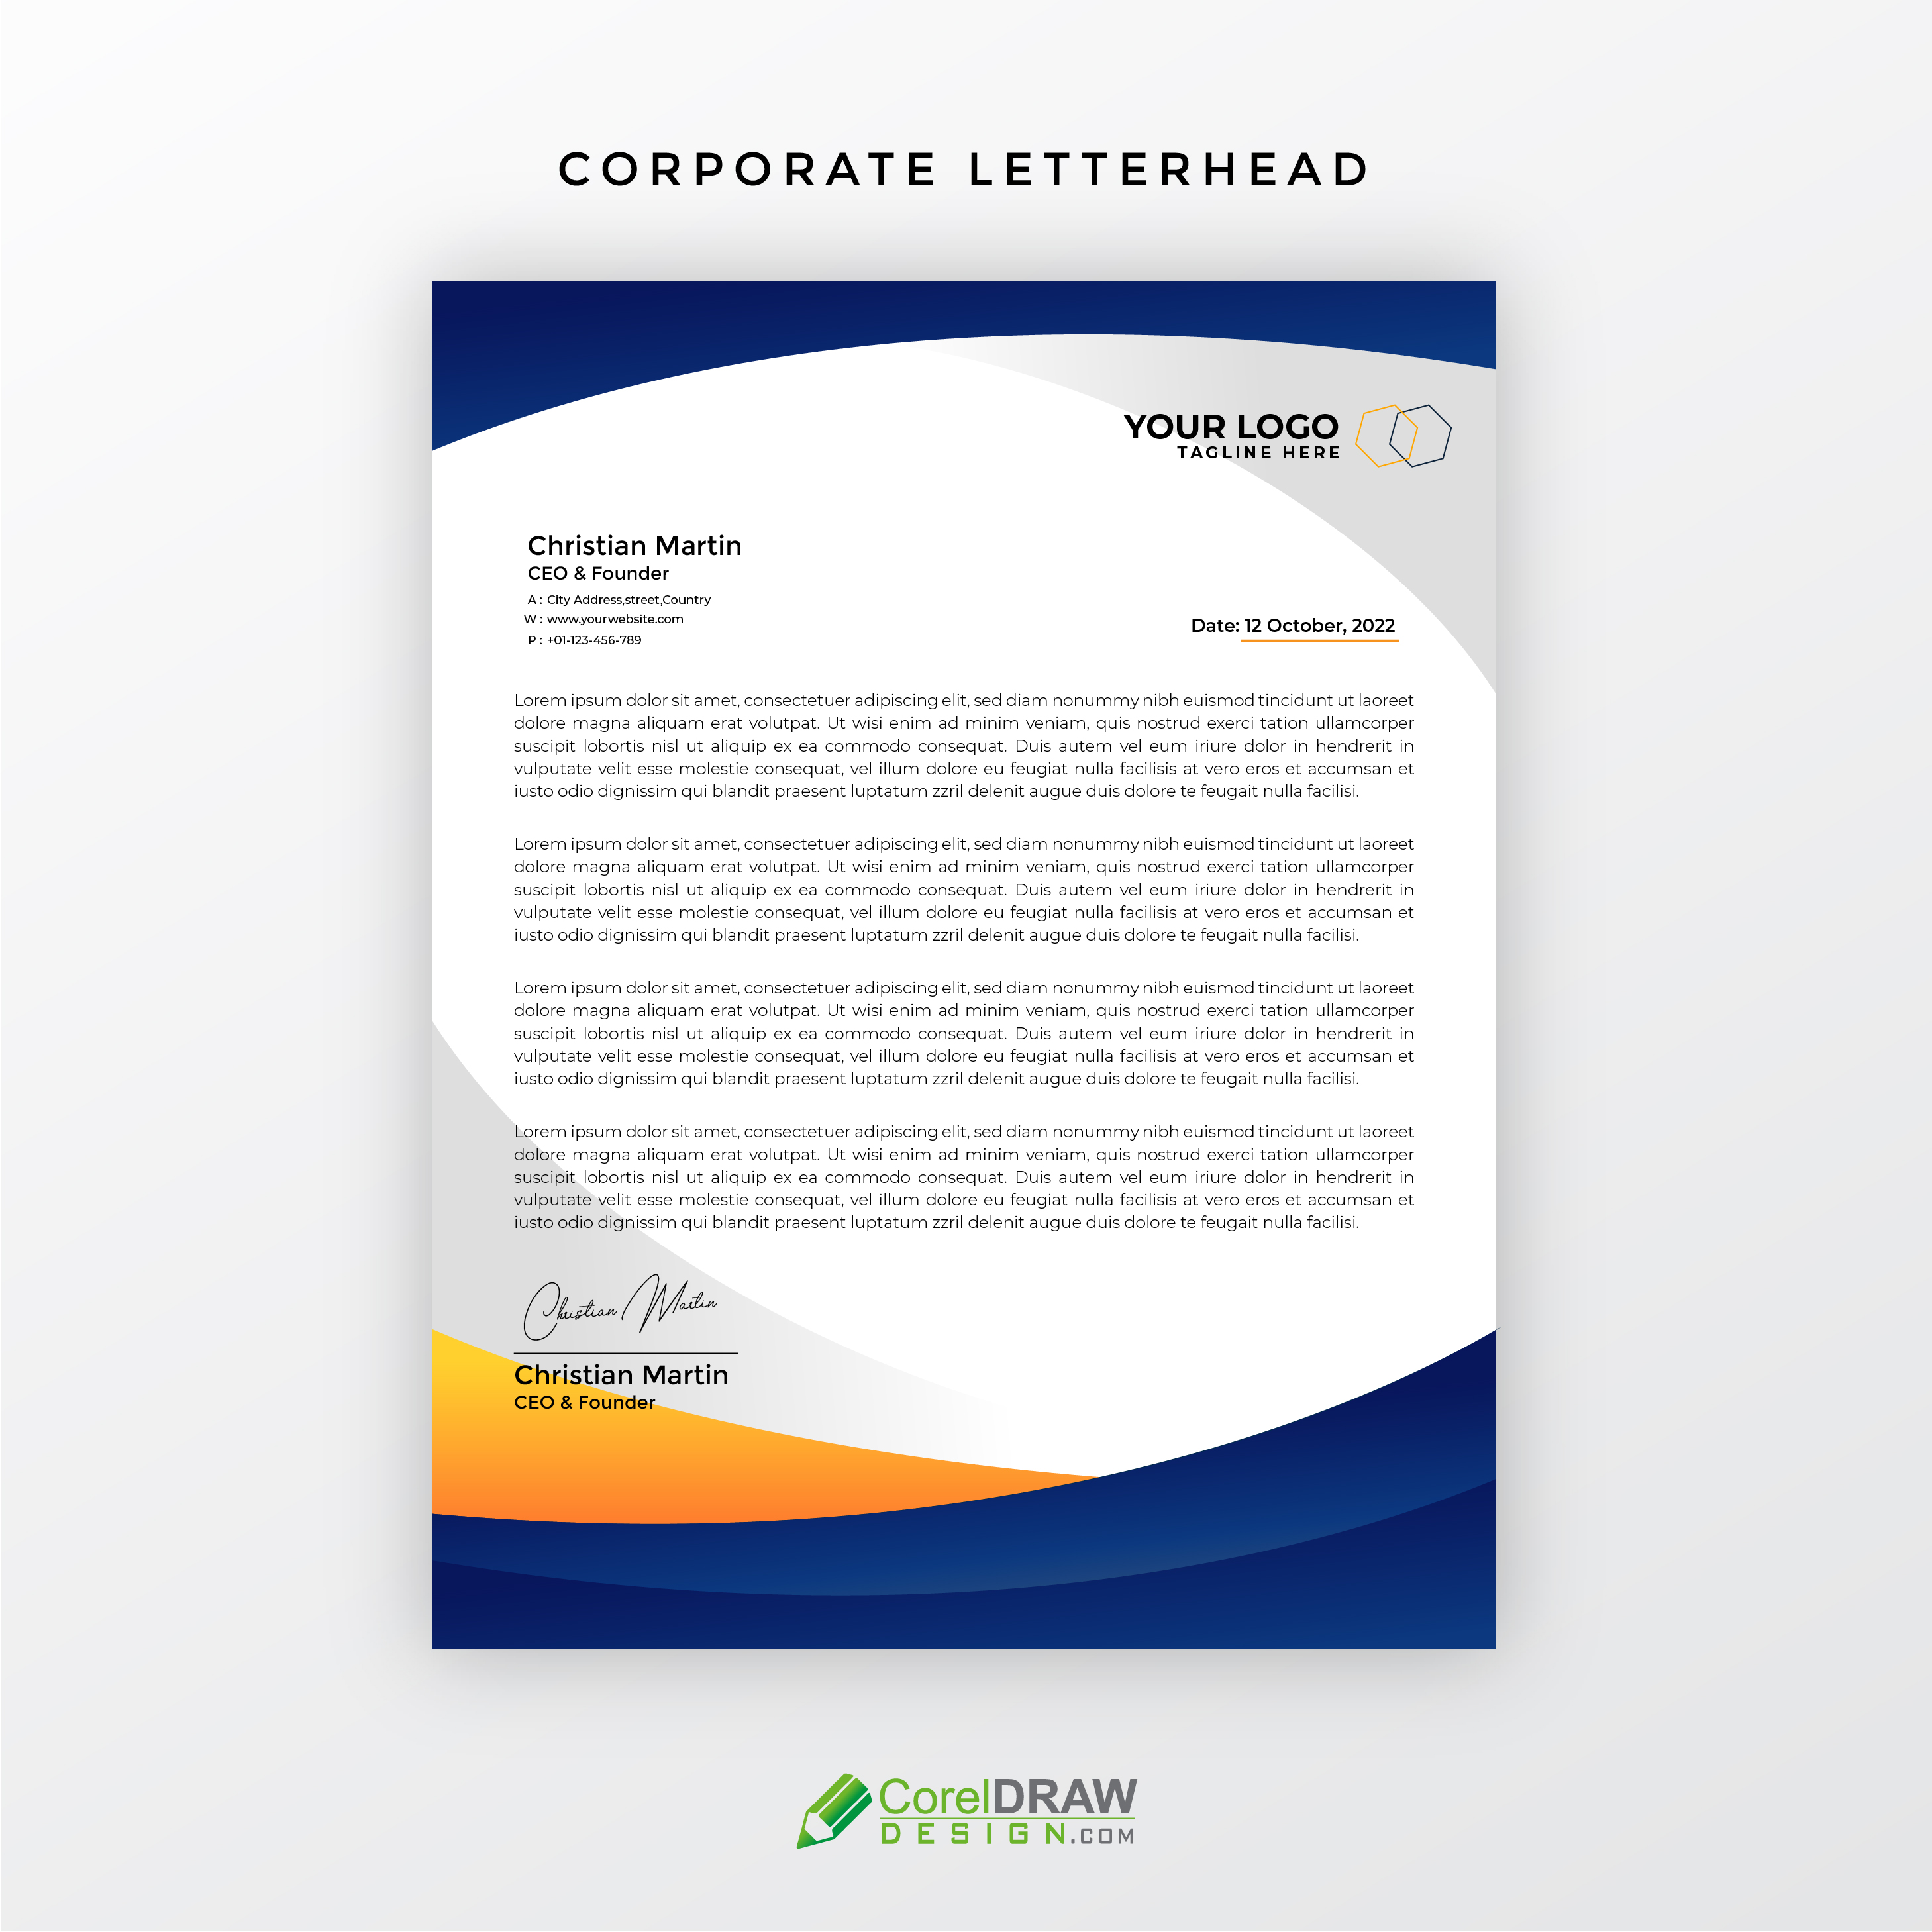 Professional Company Corporate letterhead